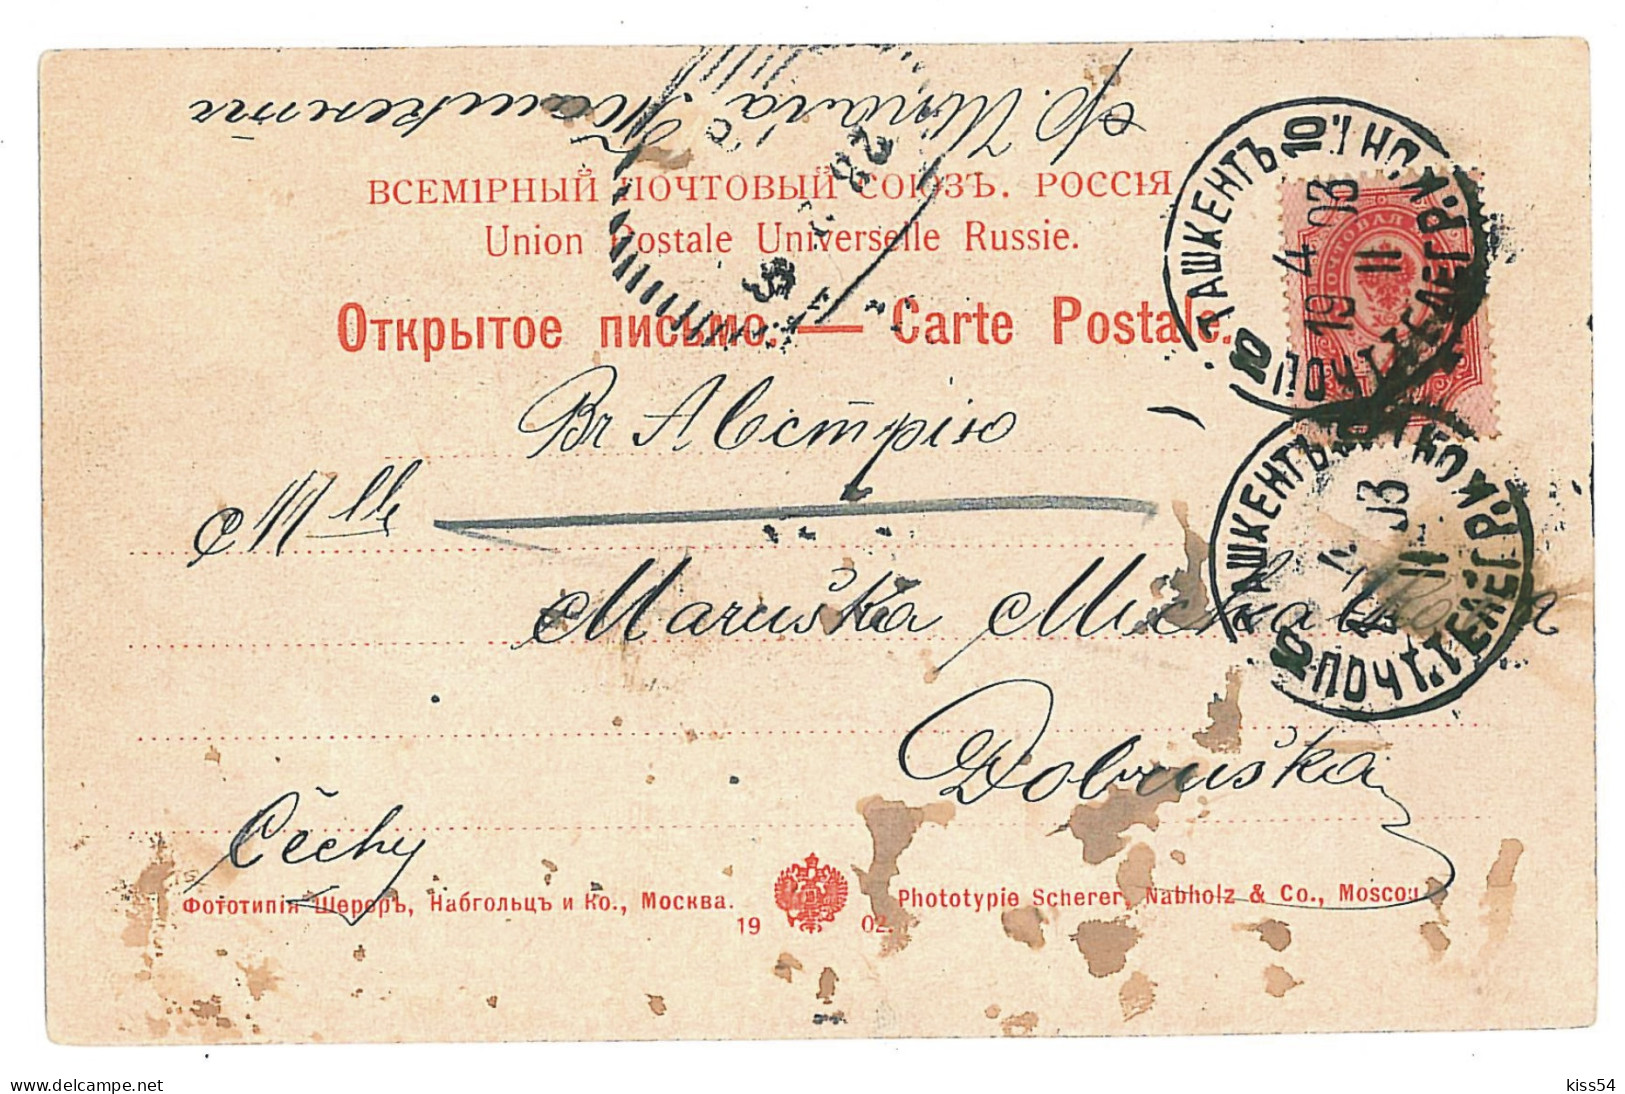 U 11 - 9828 TASHKENT, Uzbekistan, Church - Old Postcard - Used - 1903 - Usbekistan